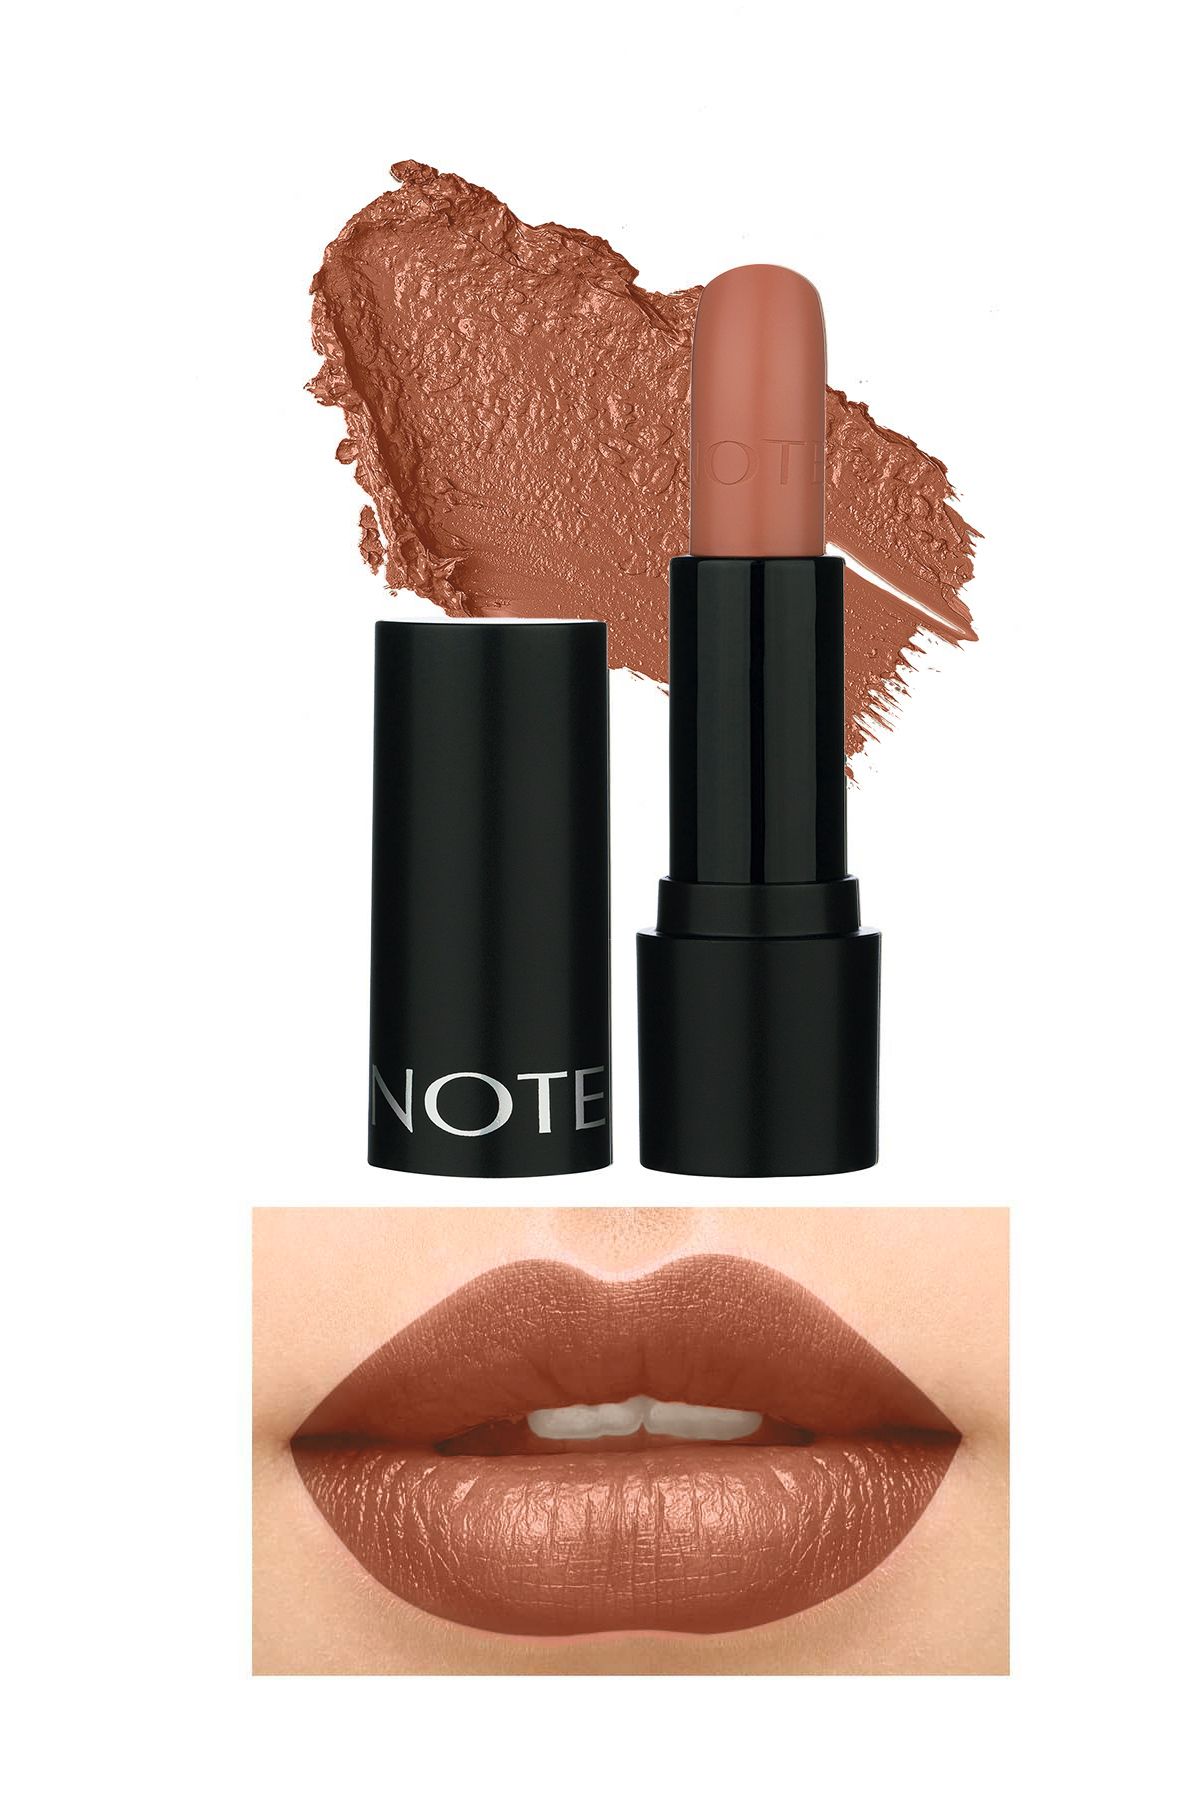 Note Cosmetics Deep Impact Lipstick Kremsi Dokulu Yarı Parlak Ruj 01 The Better Me Nude - Nude